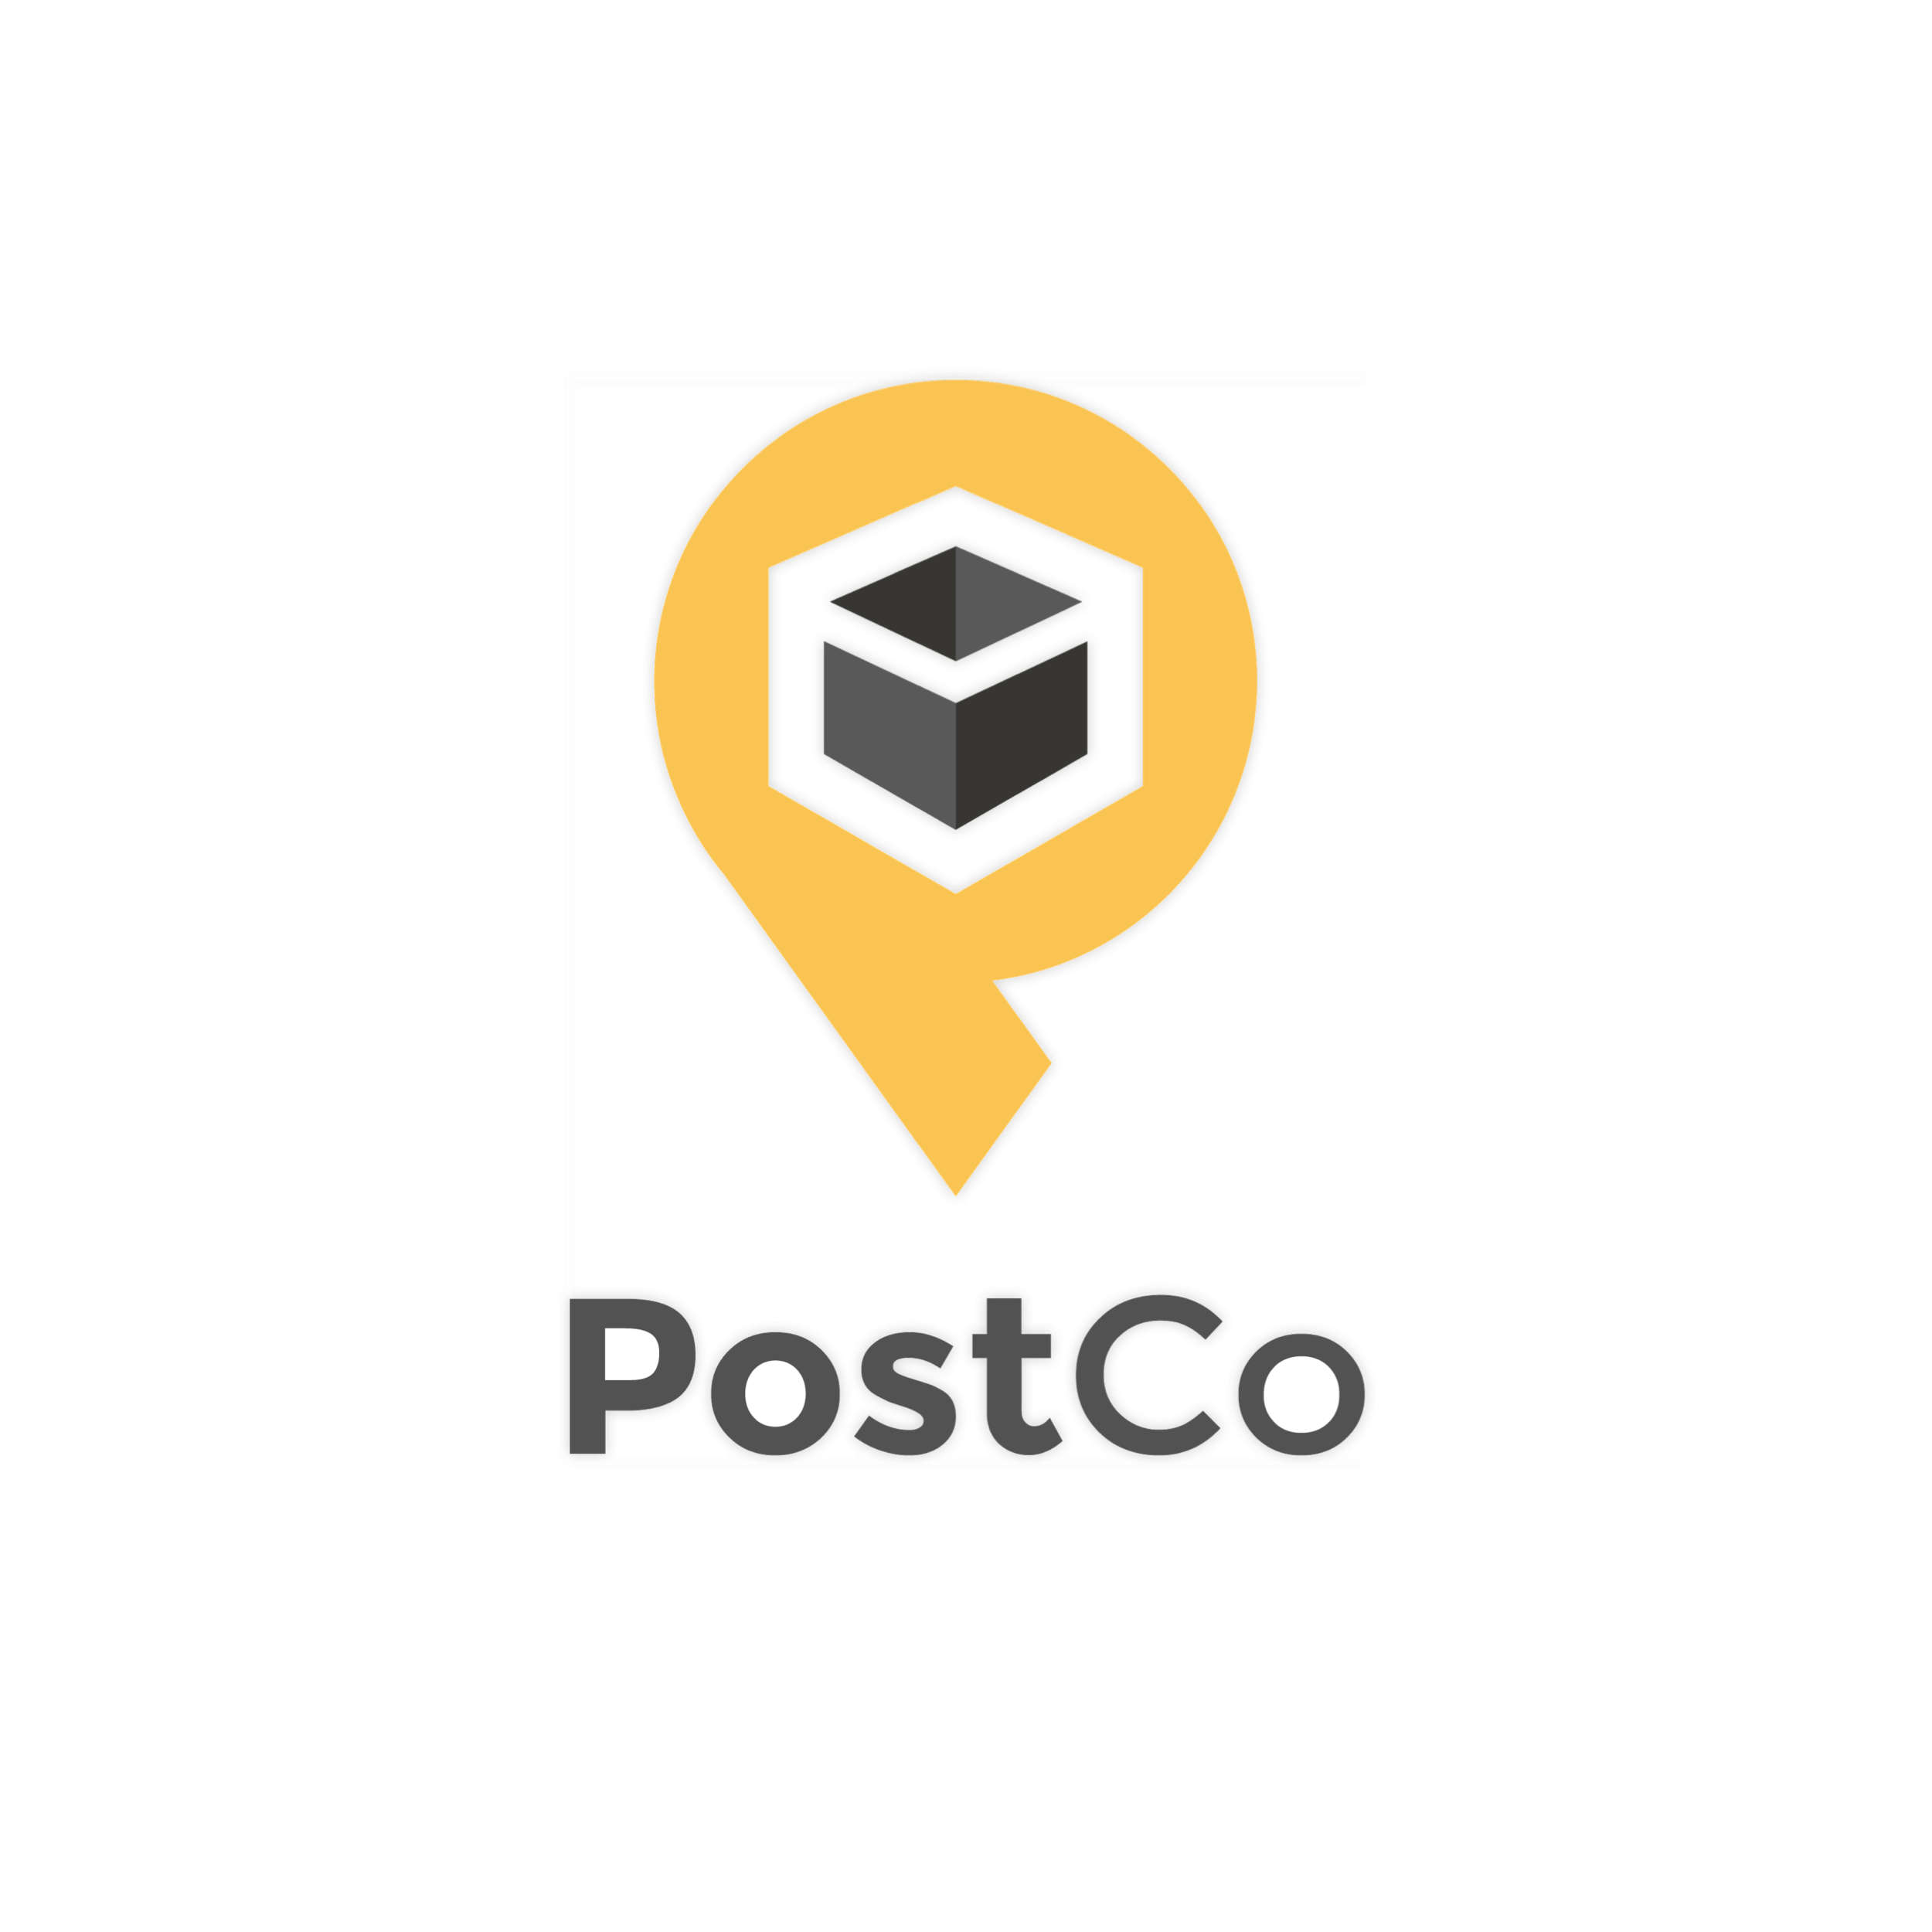 Posco - Crunchbase Company Profile & Funding